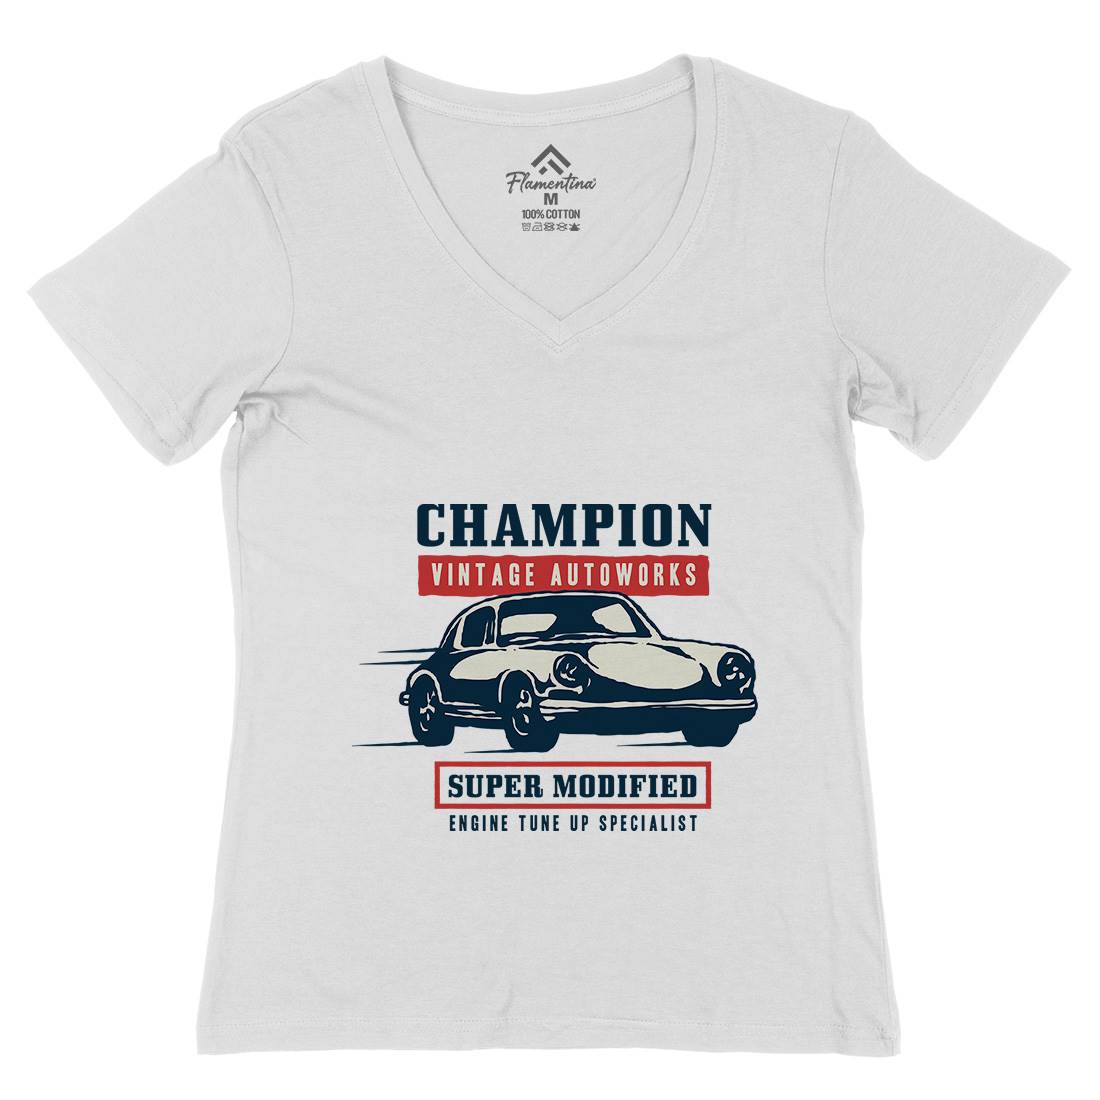 Classic Race Womens Organic V-Neck T-Shirt Cars A411